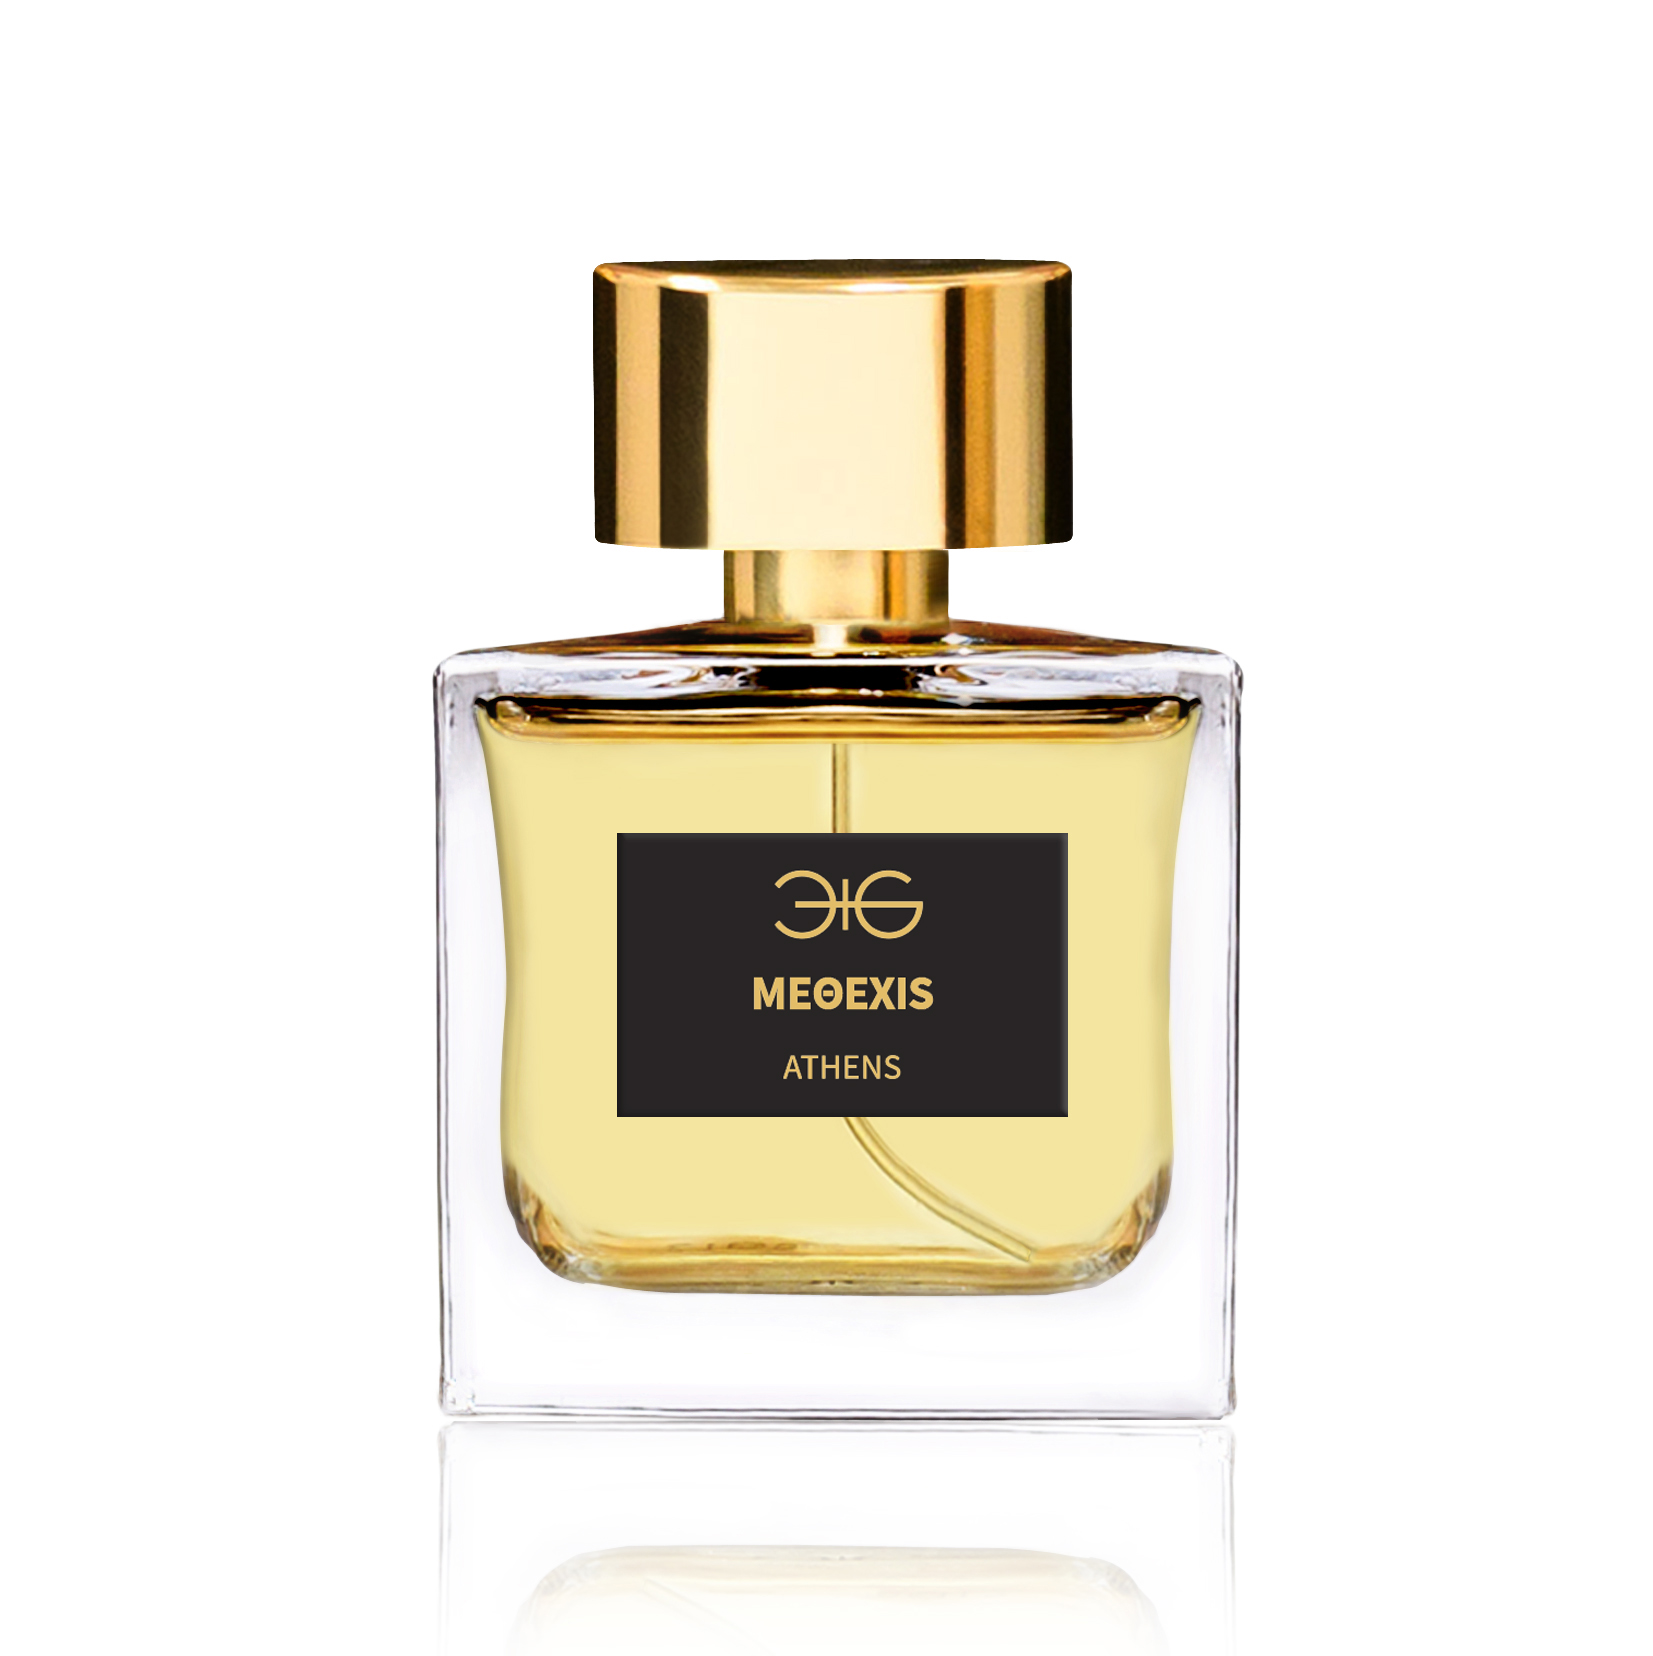 methexis manos gerakinis MGP daring light perfumes niche barcelona